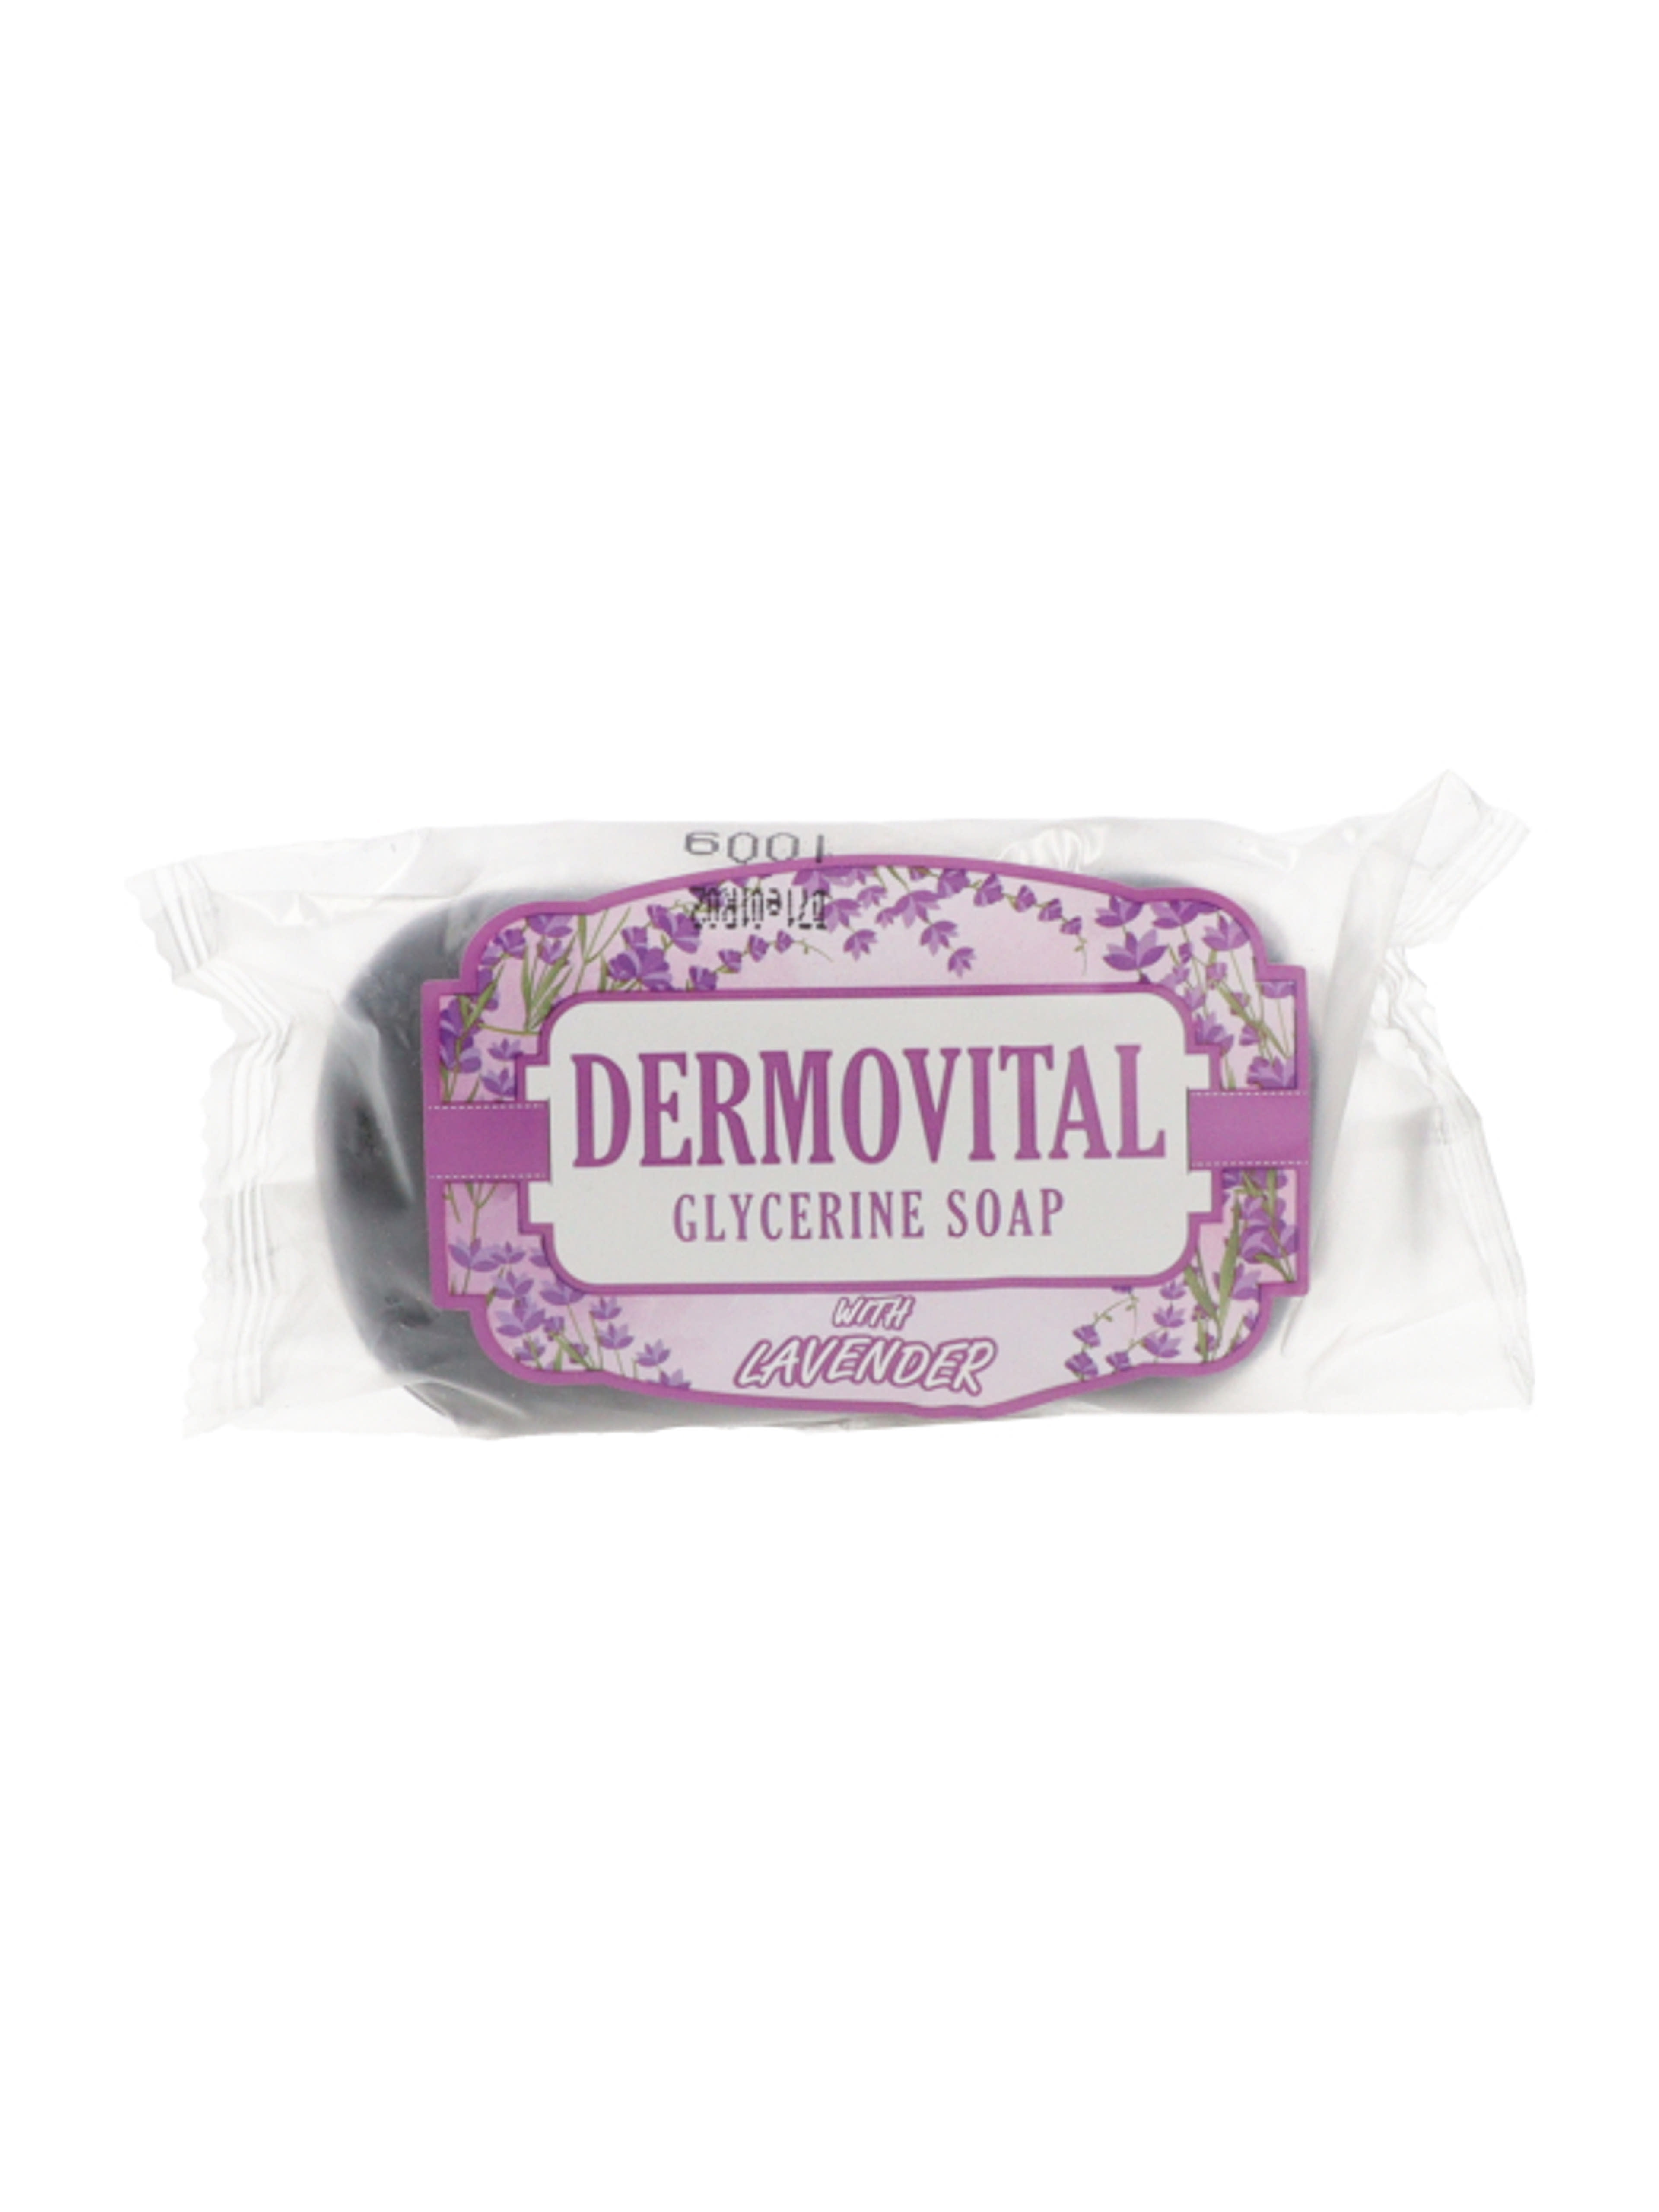 Dermovital Lavender glicerines szappan - 100 g